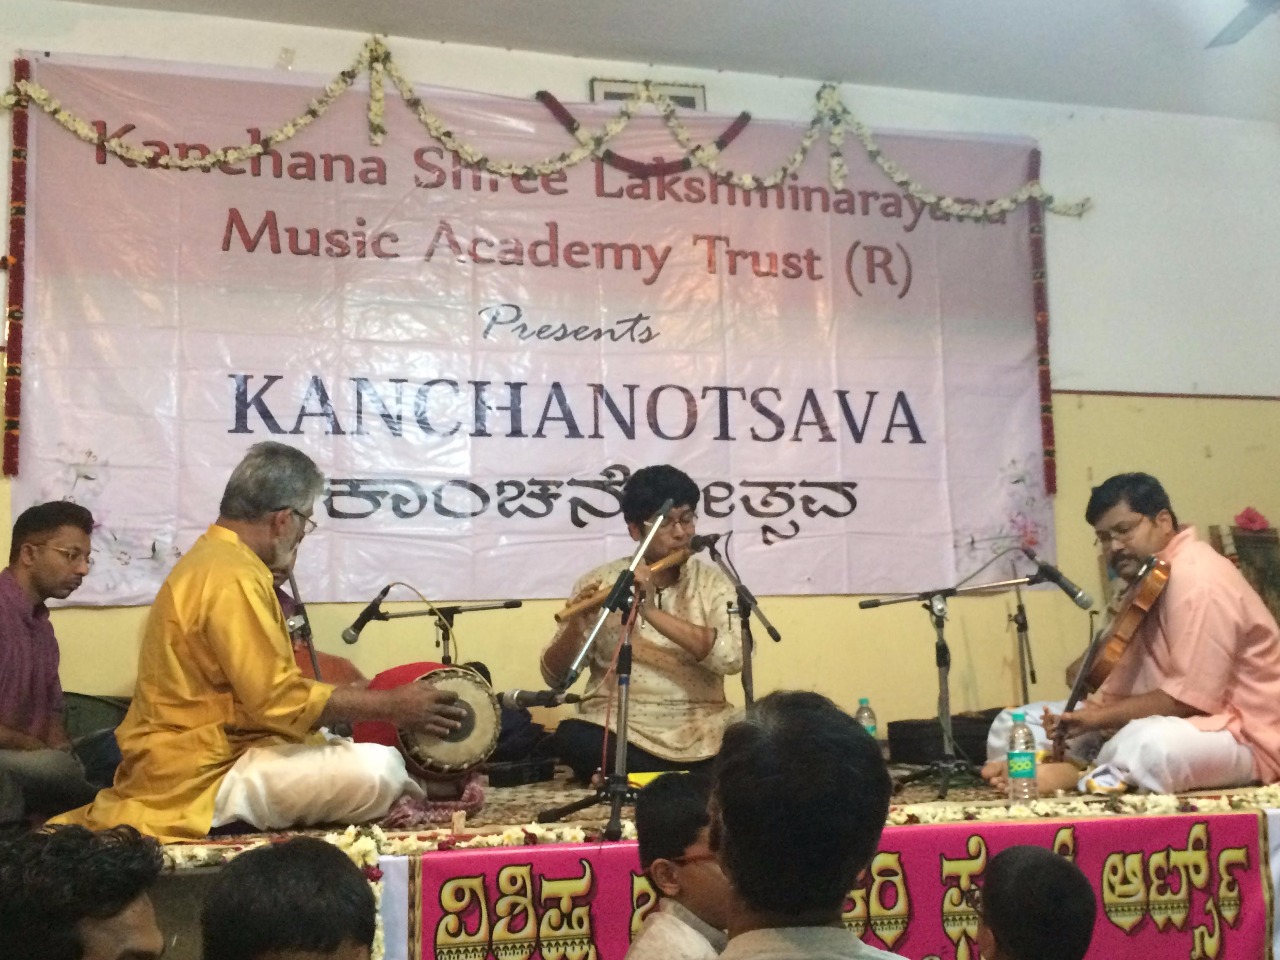 Kanchanothsava 2015 - Amith Nadig - flute, Mathur Shrinidhi - violin, Trichur C Narendran - Mridangam, Omkar Rao - Ghatam